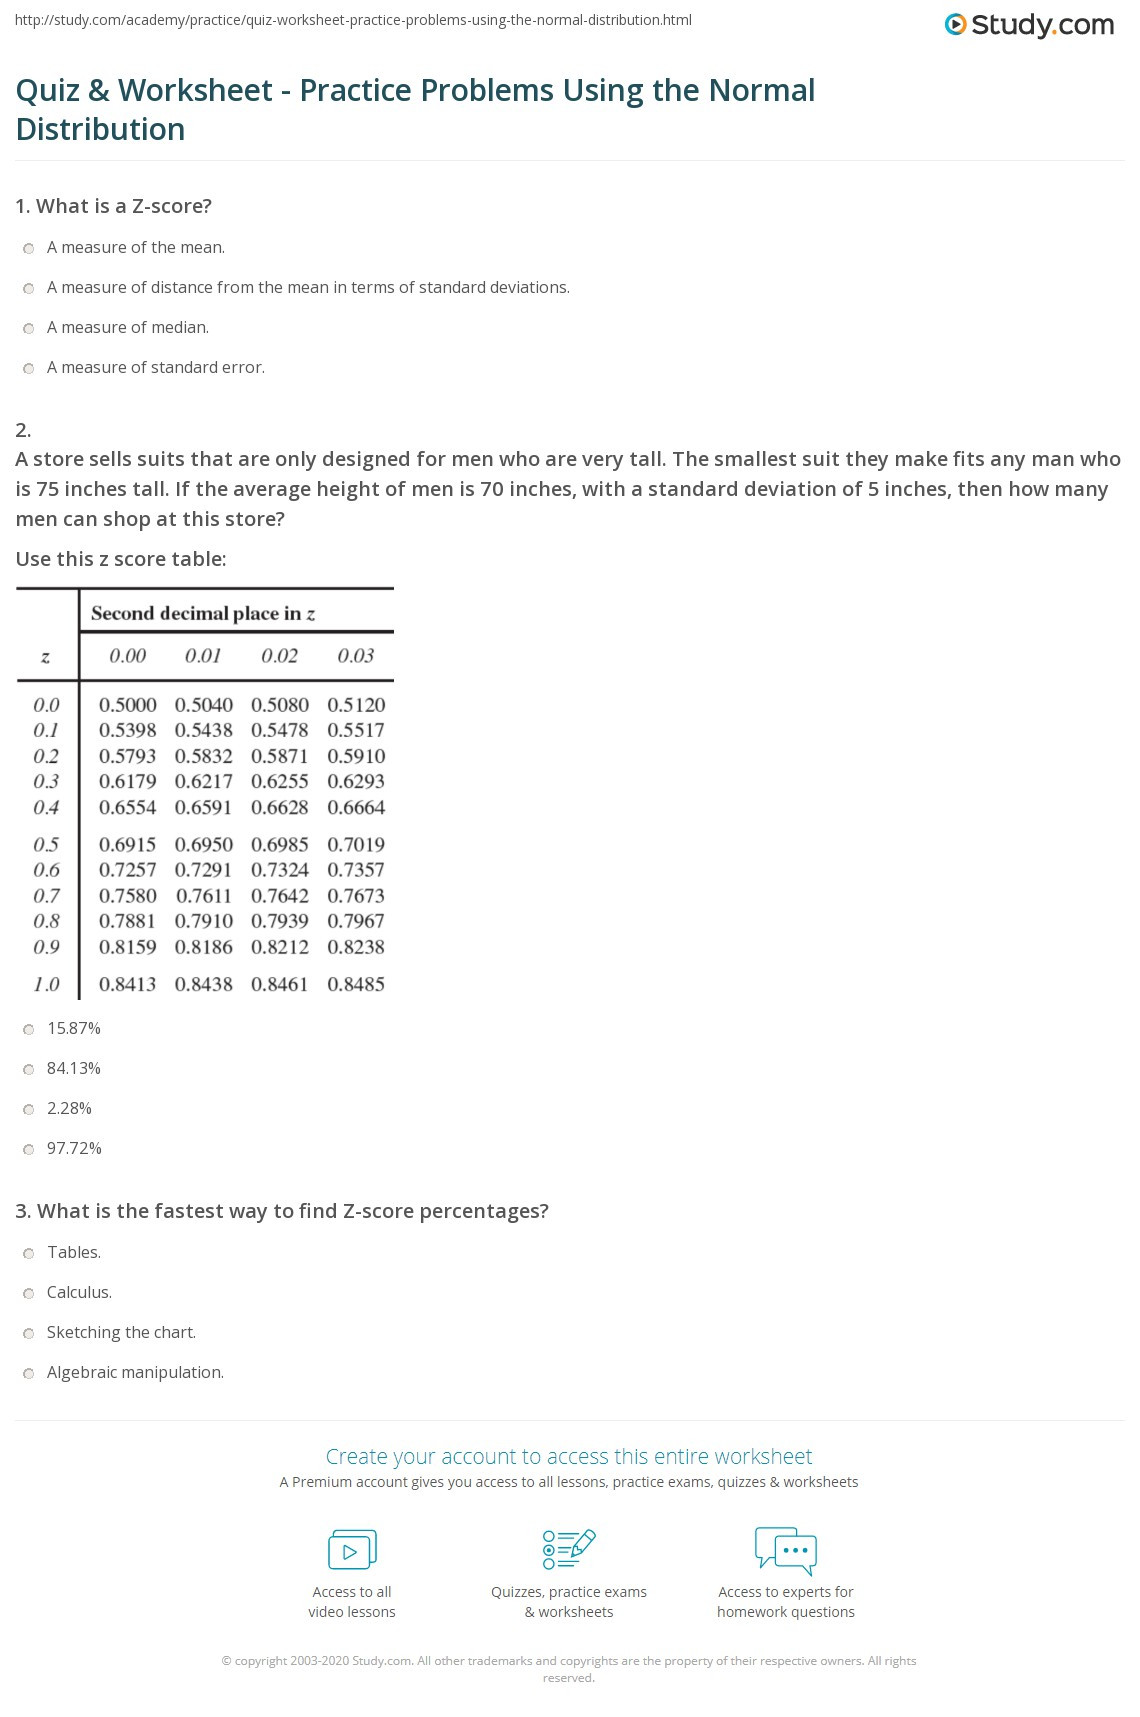 Z Score Practice Worksheet Quiz &amp; Worksheet Practice Problems Using the normal